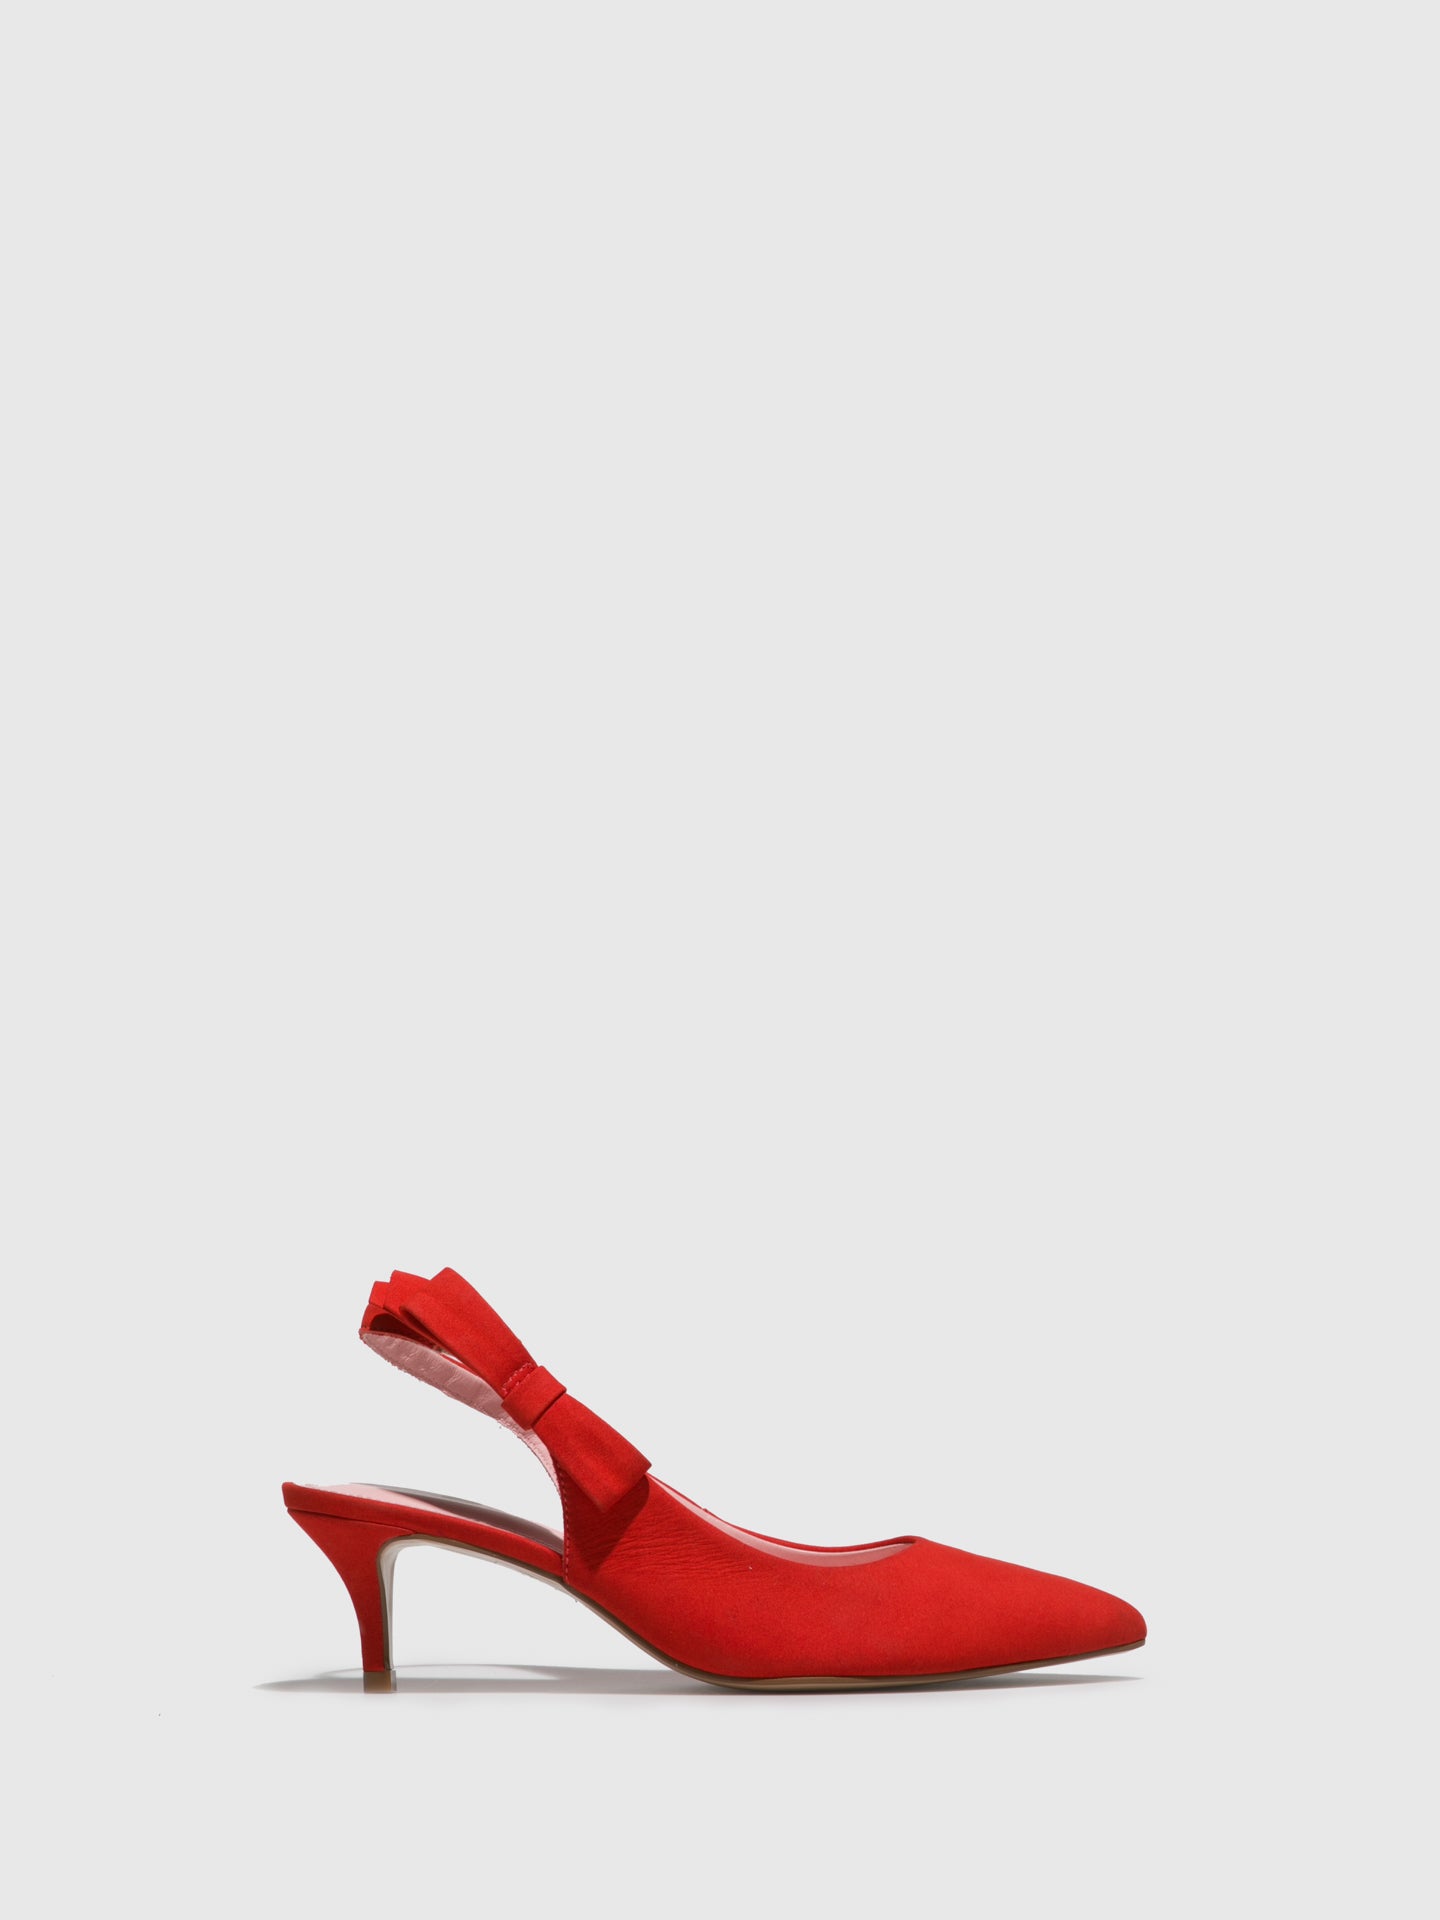 Parodi Passion Red Sling-Back Pumps Sandals